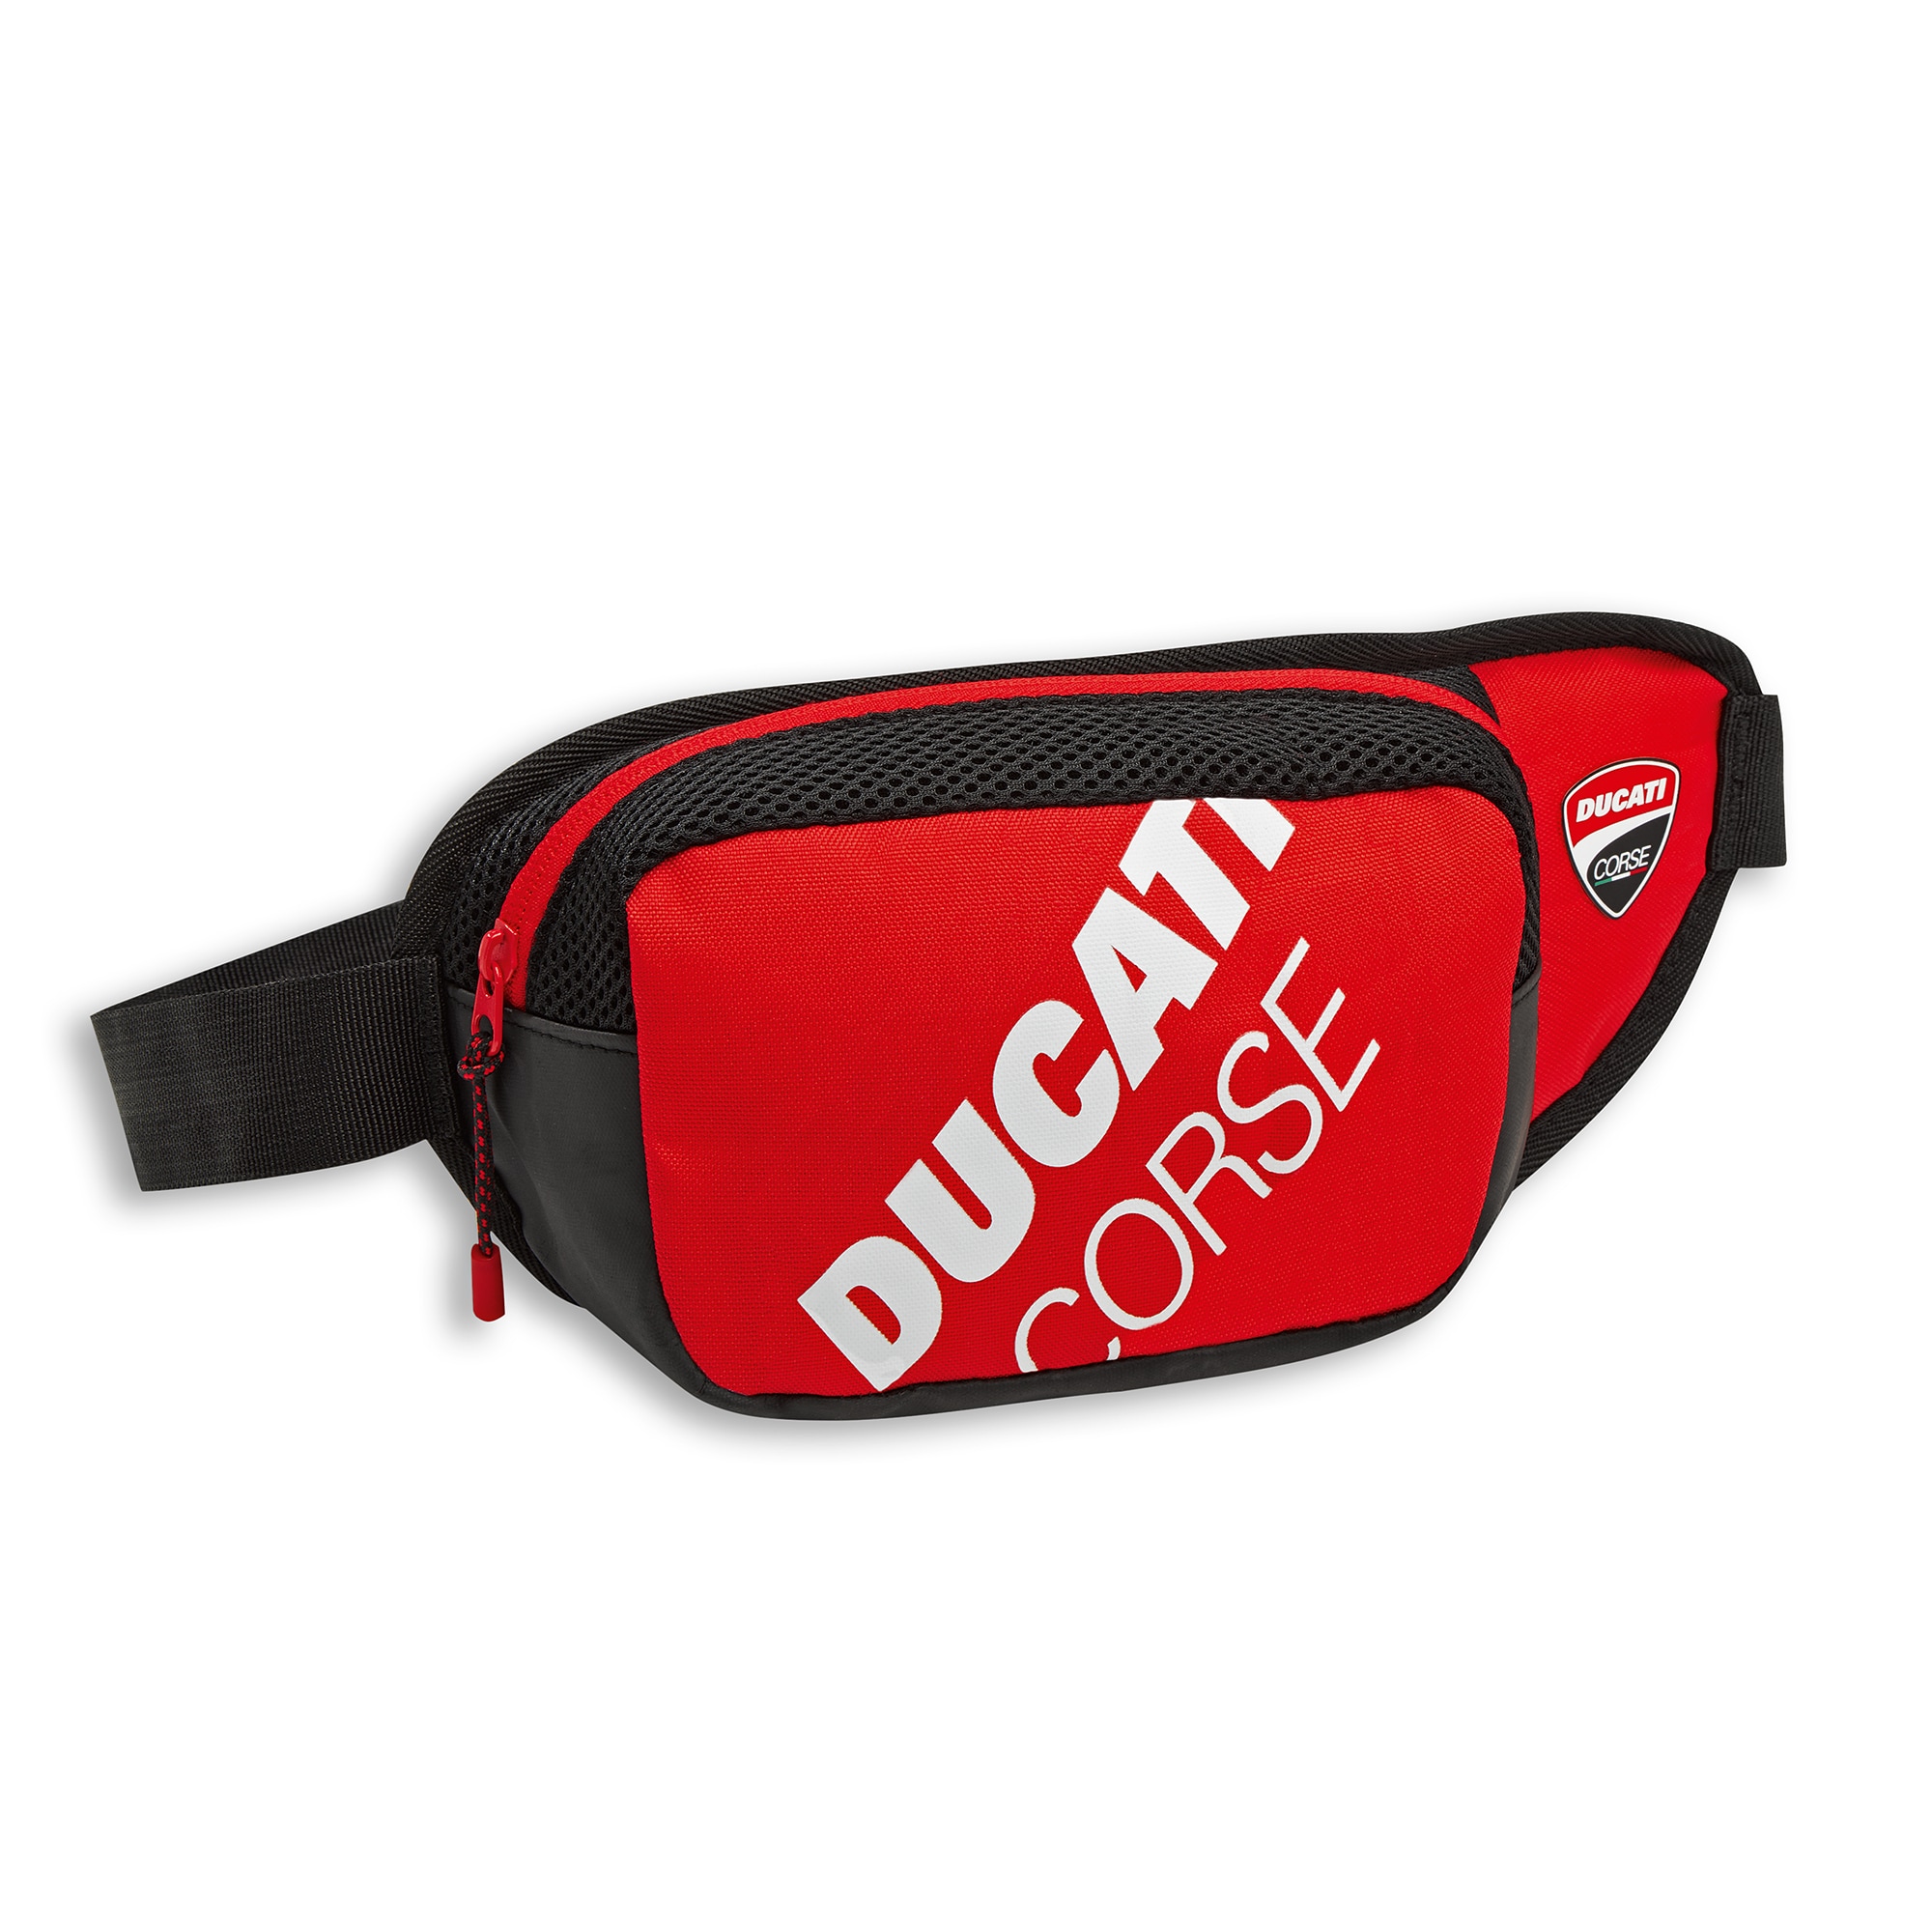 Ducati Freetime - Waist bag